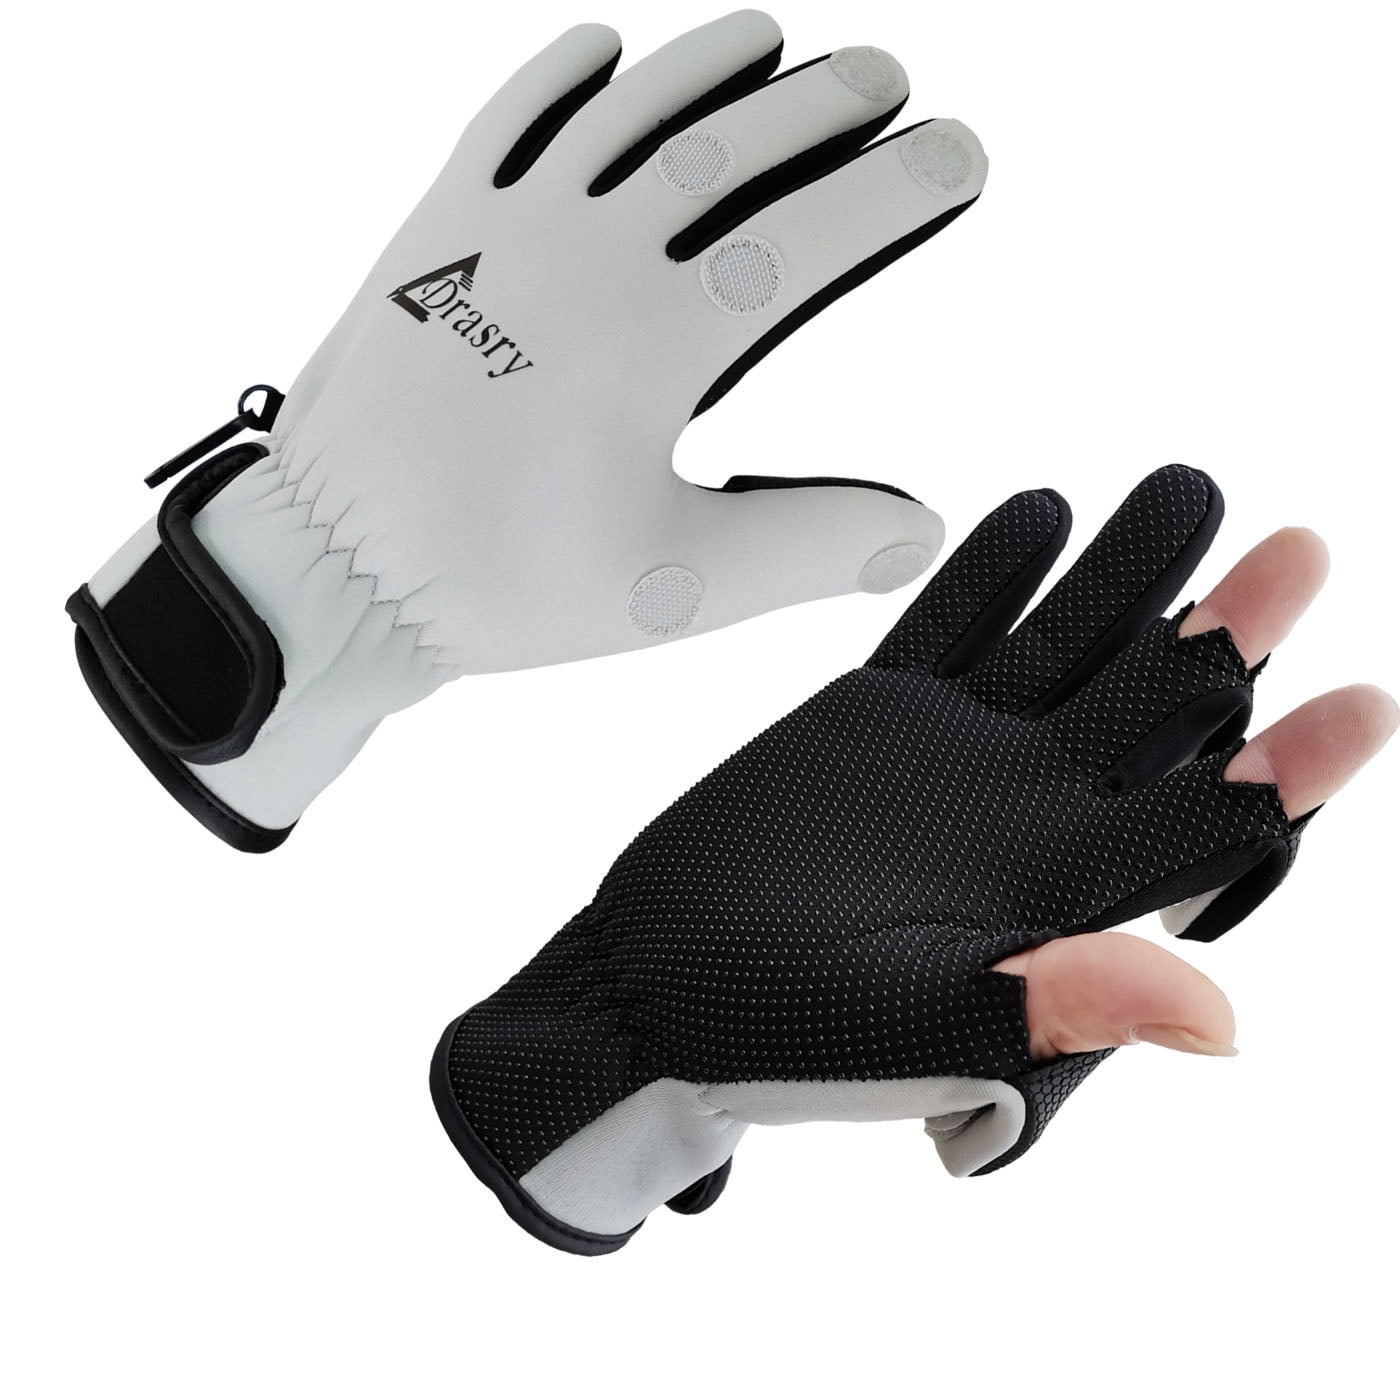 Drasry Neoprene Gloves Touchscreen 3 Cut Fingers Warm Cold Man